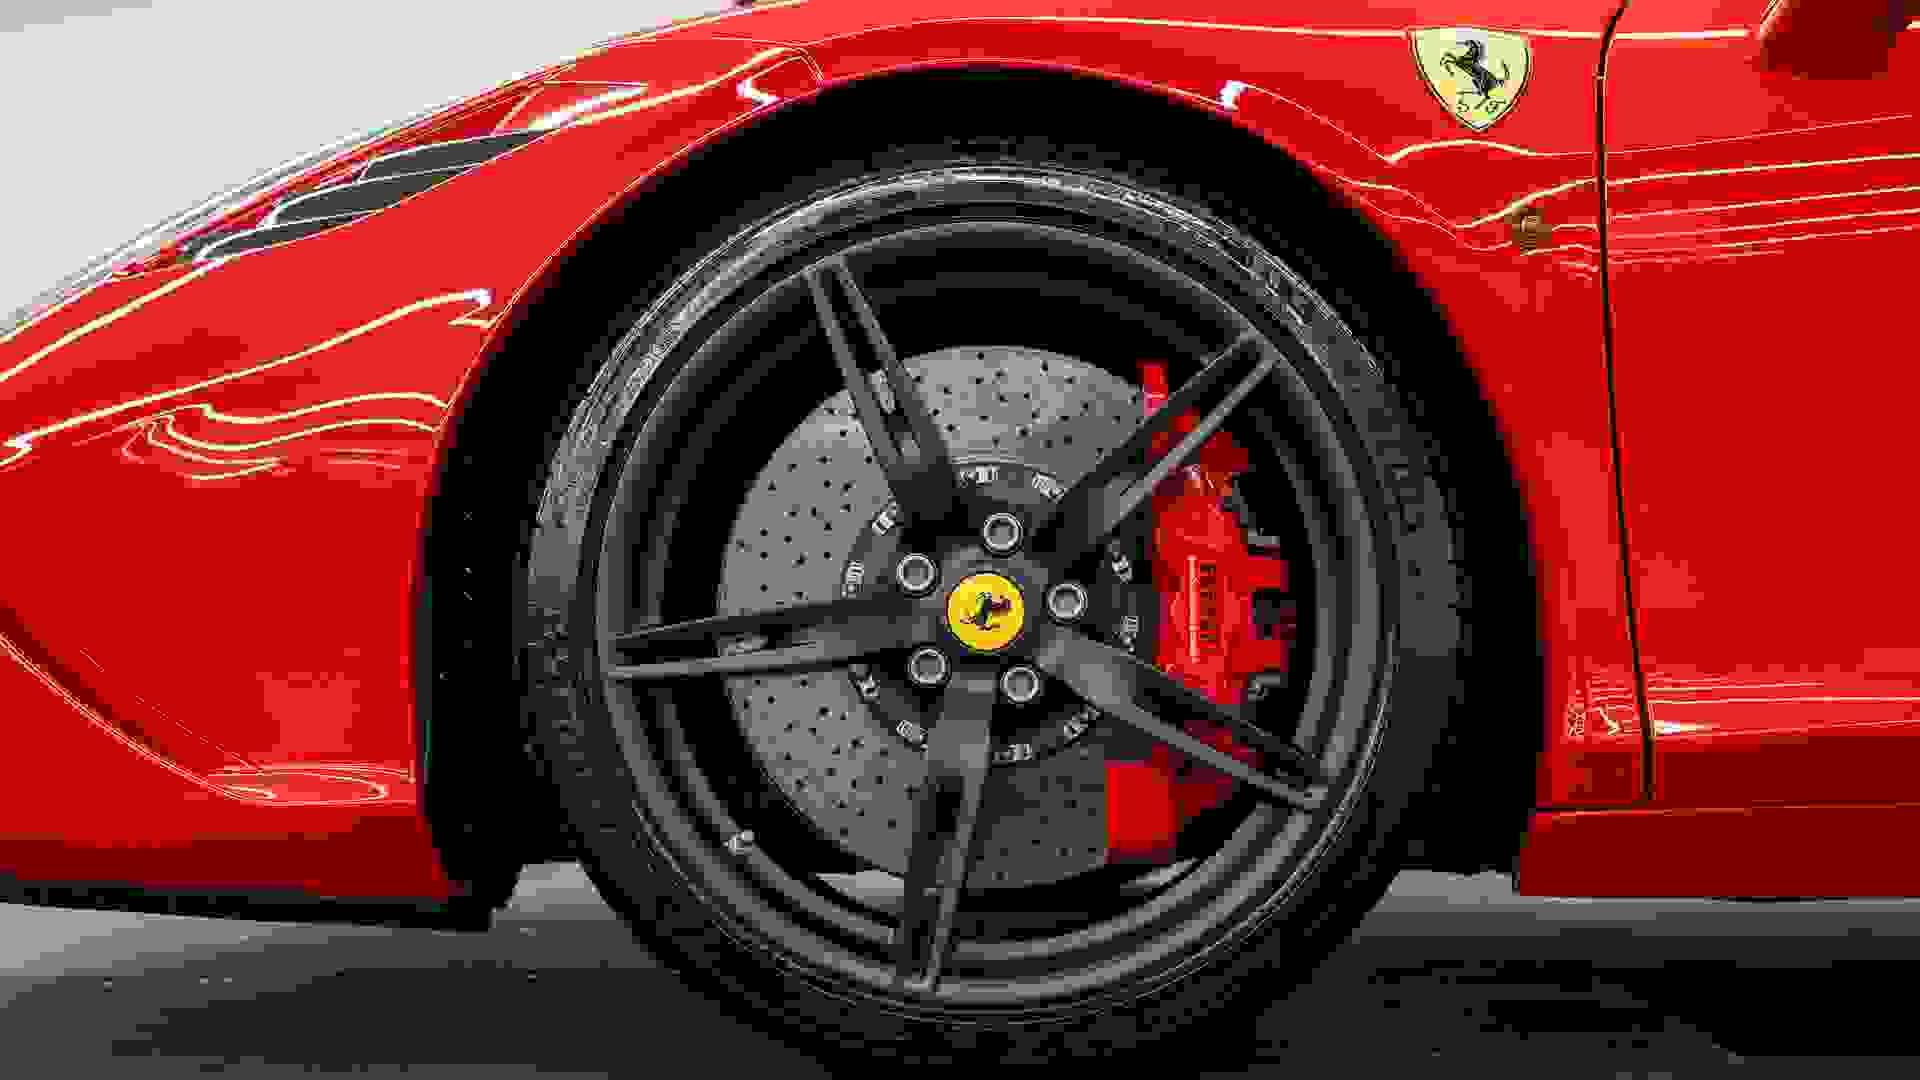 Ferrari 458 Photo 4f0d48da-c473-459d-a5c9-20961feafdf5.jpg